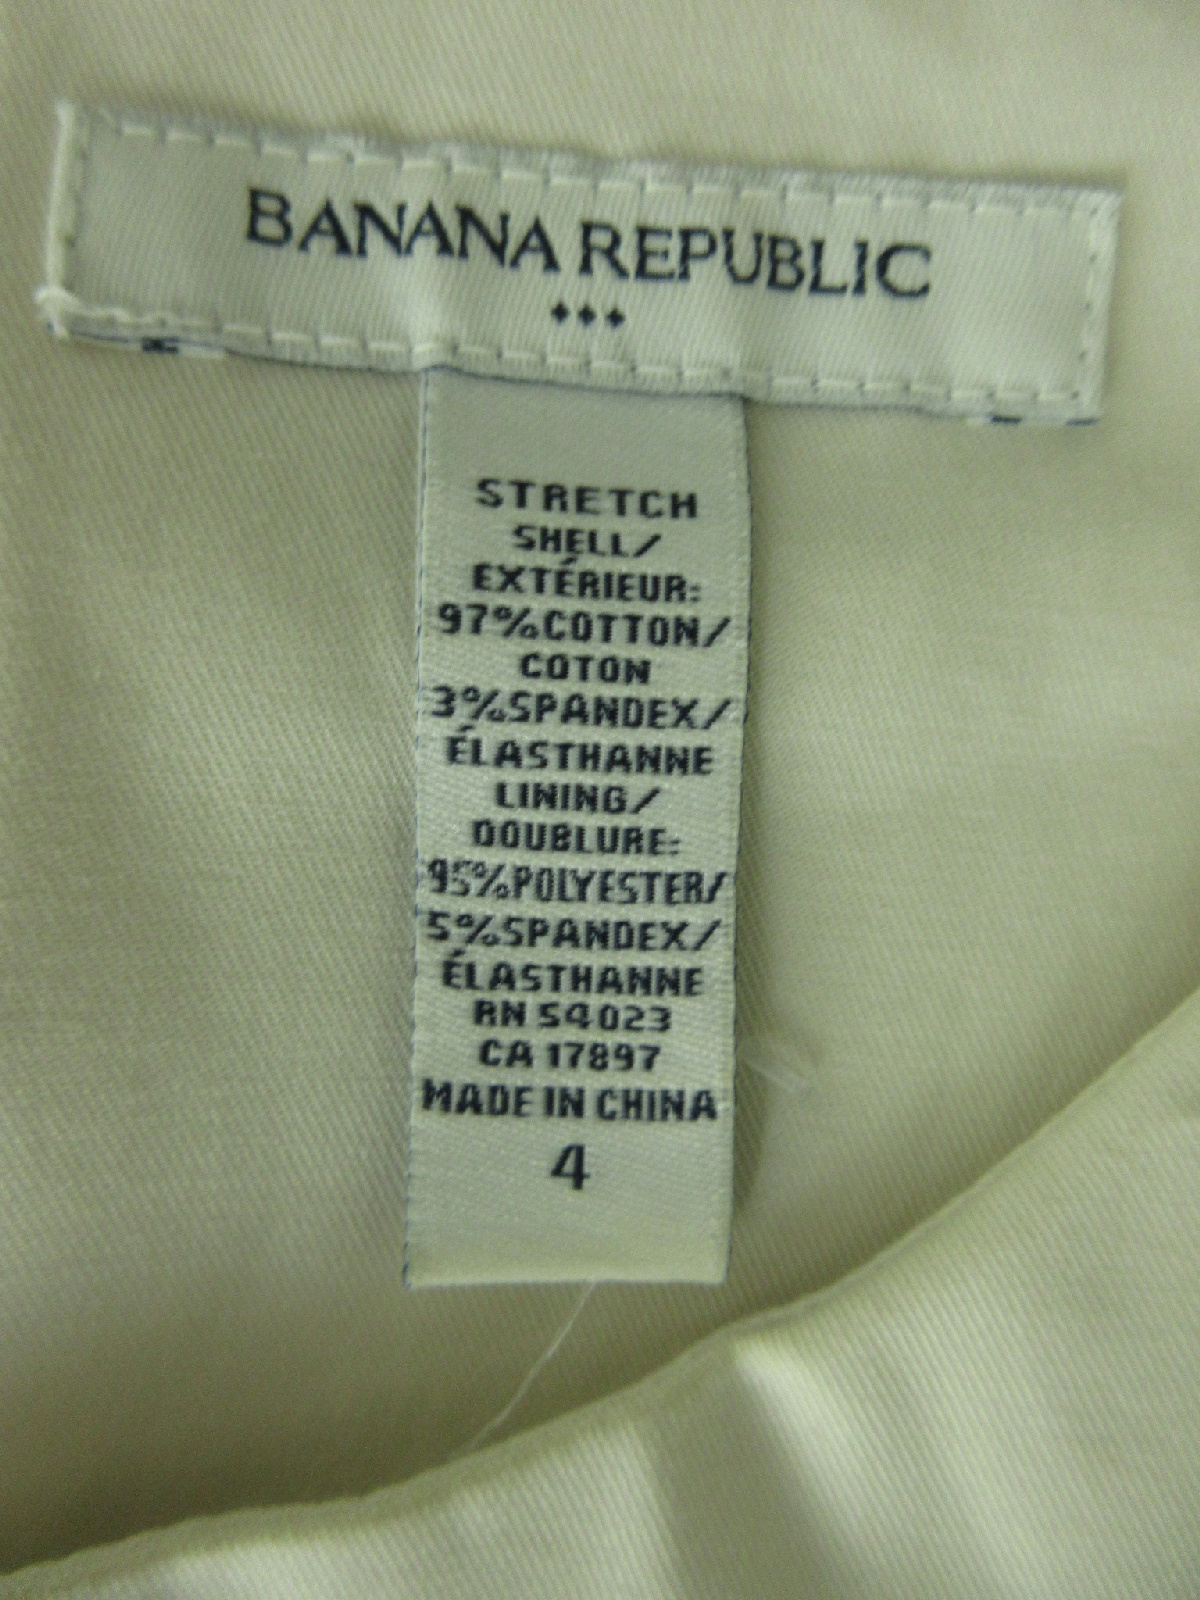 Banana Republic Return Shipping Label - Labels Ideas 2019